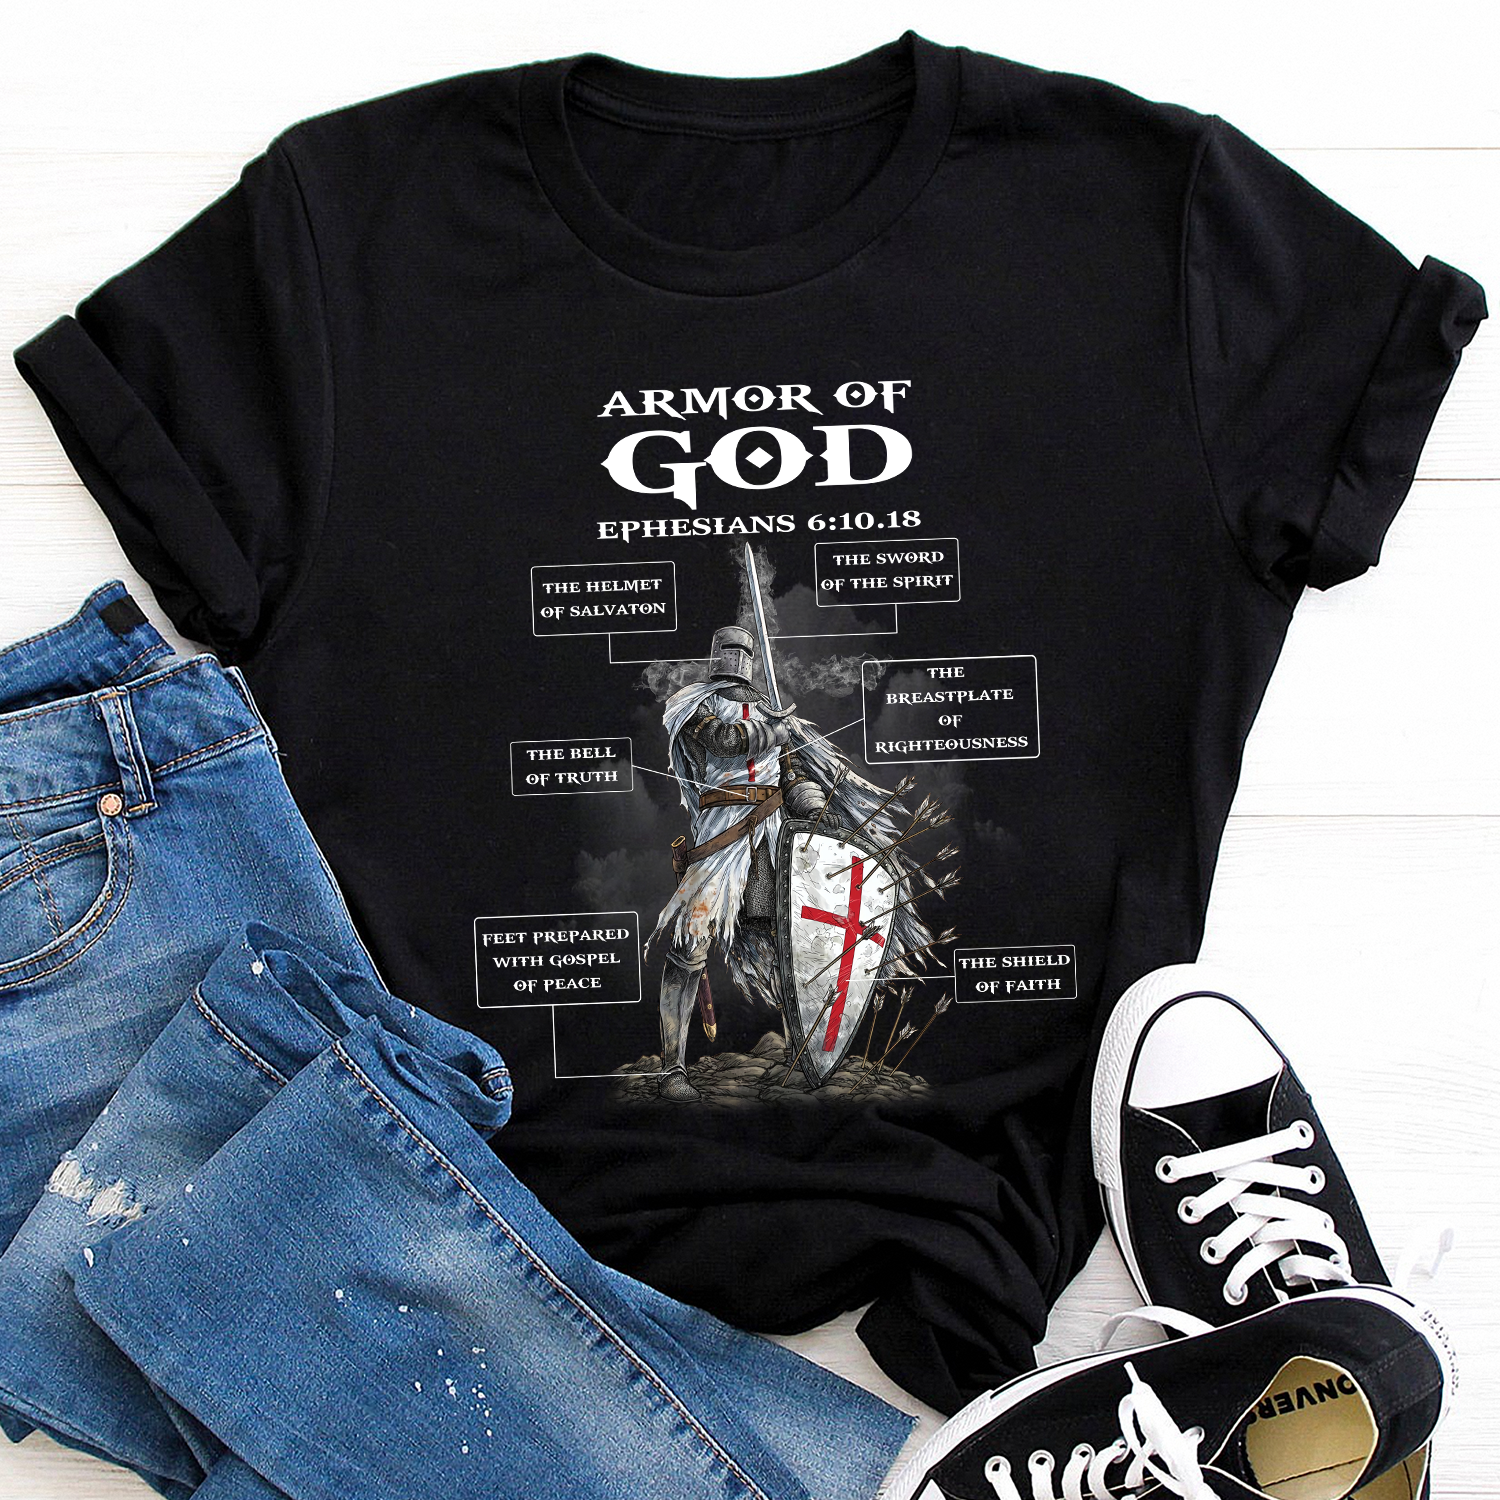 Armor of God Bible Study on Ephesians 6:10-18 T-Shirt